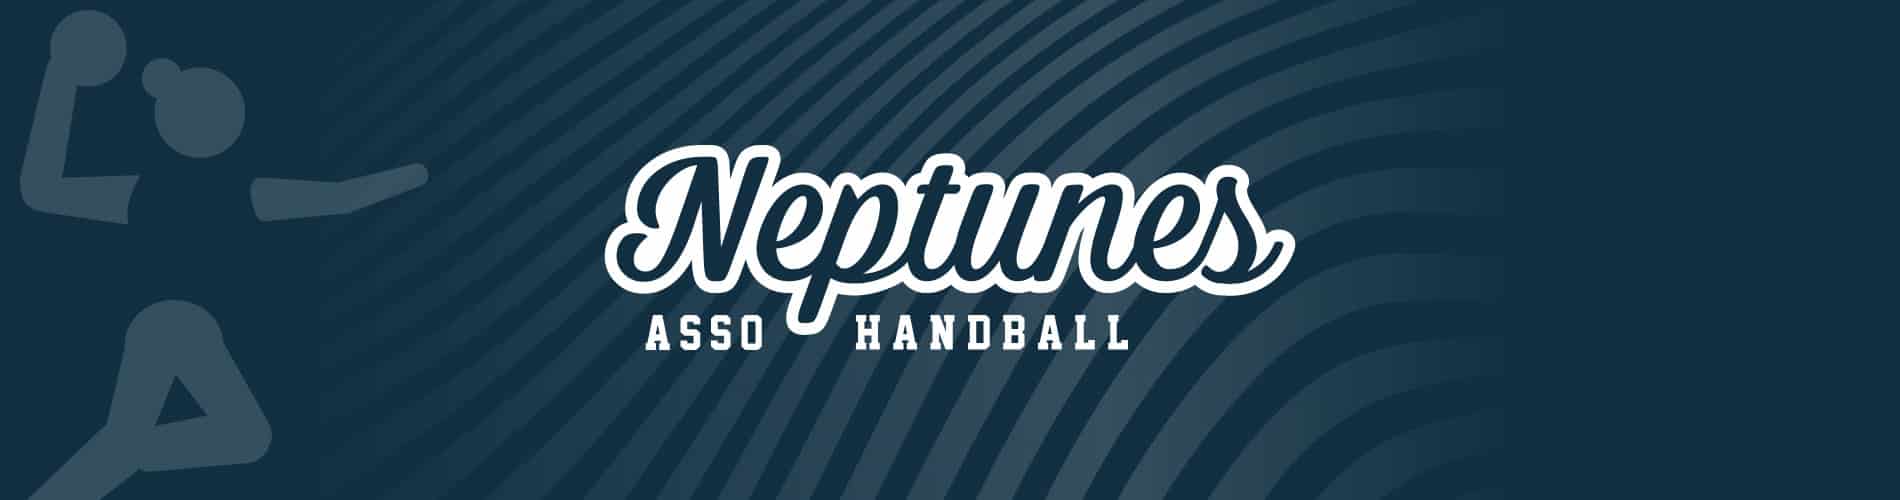 Neptunes-Asso-Hand